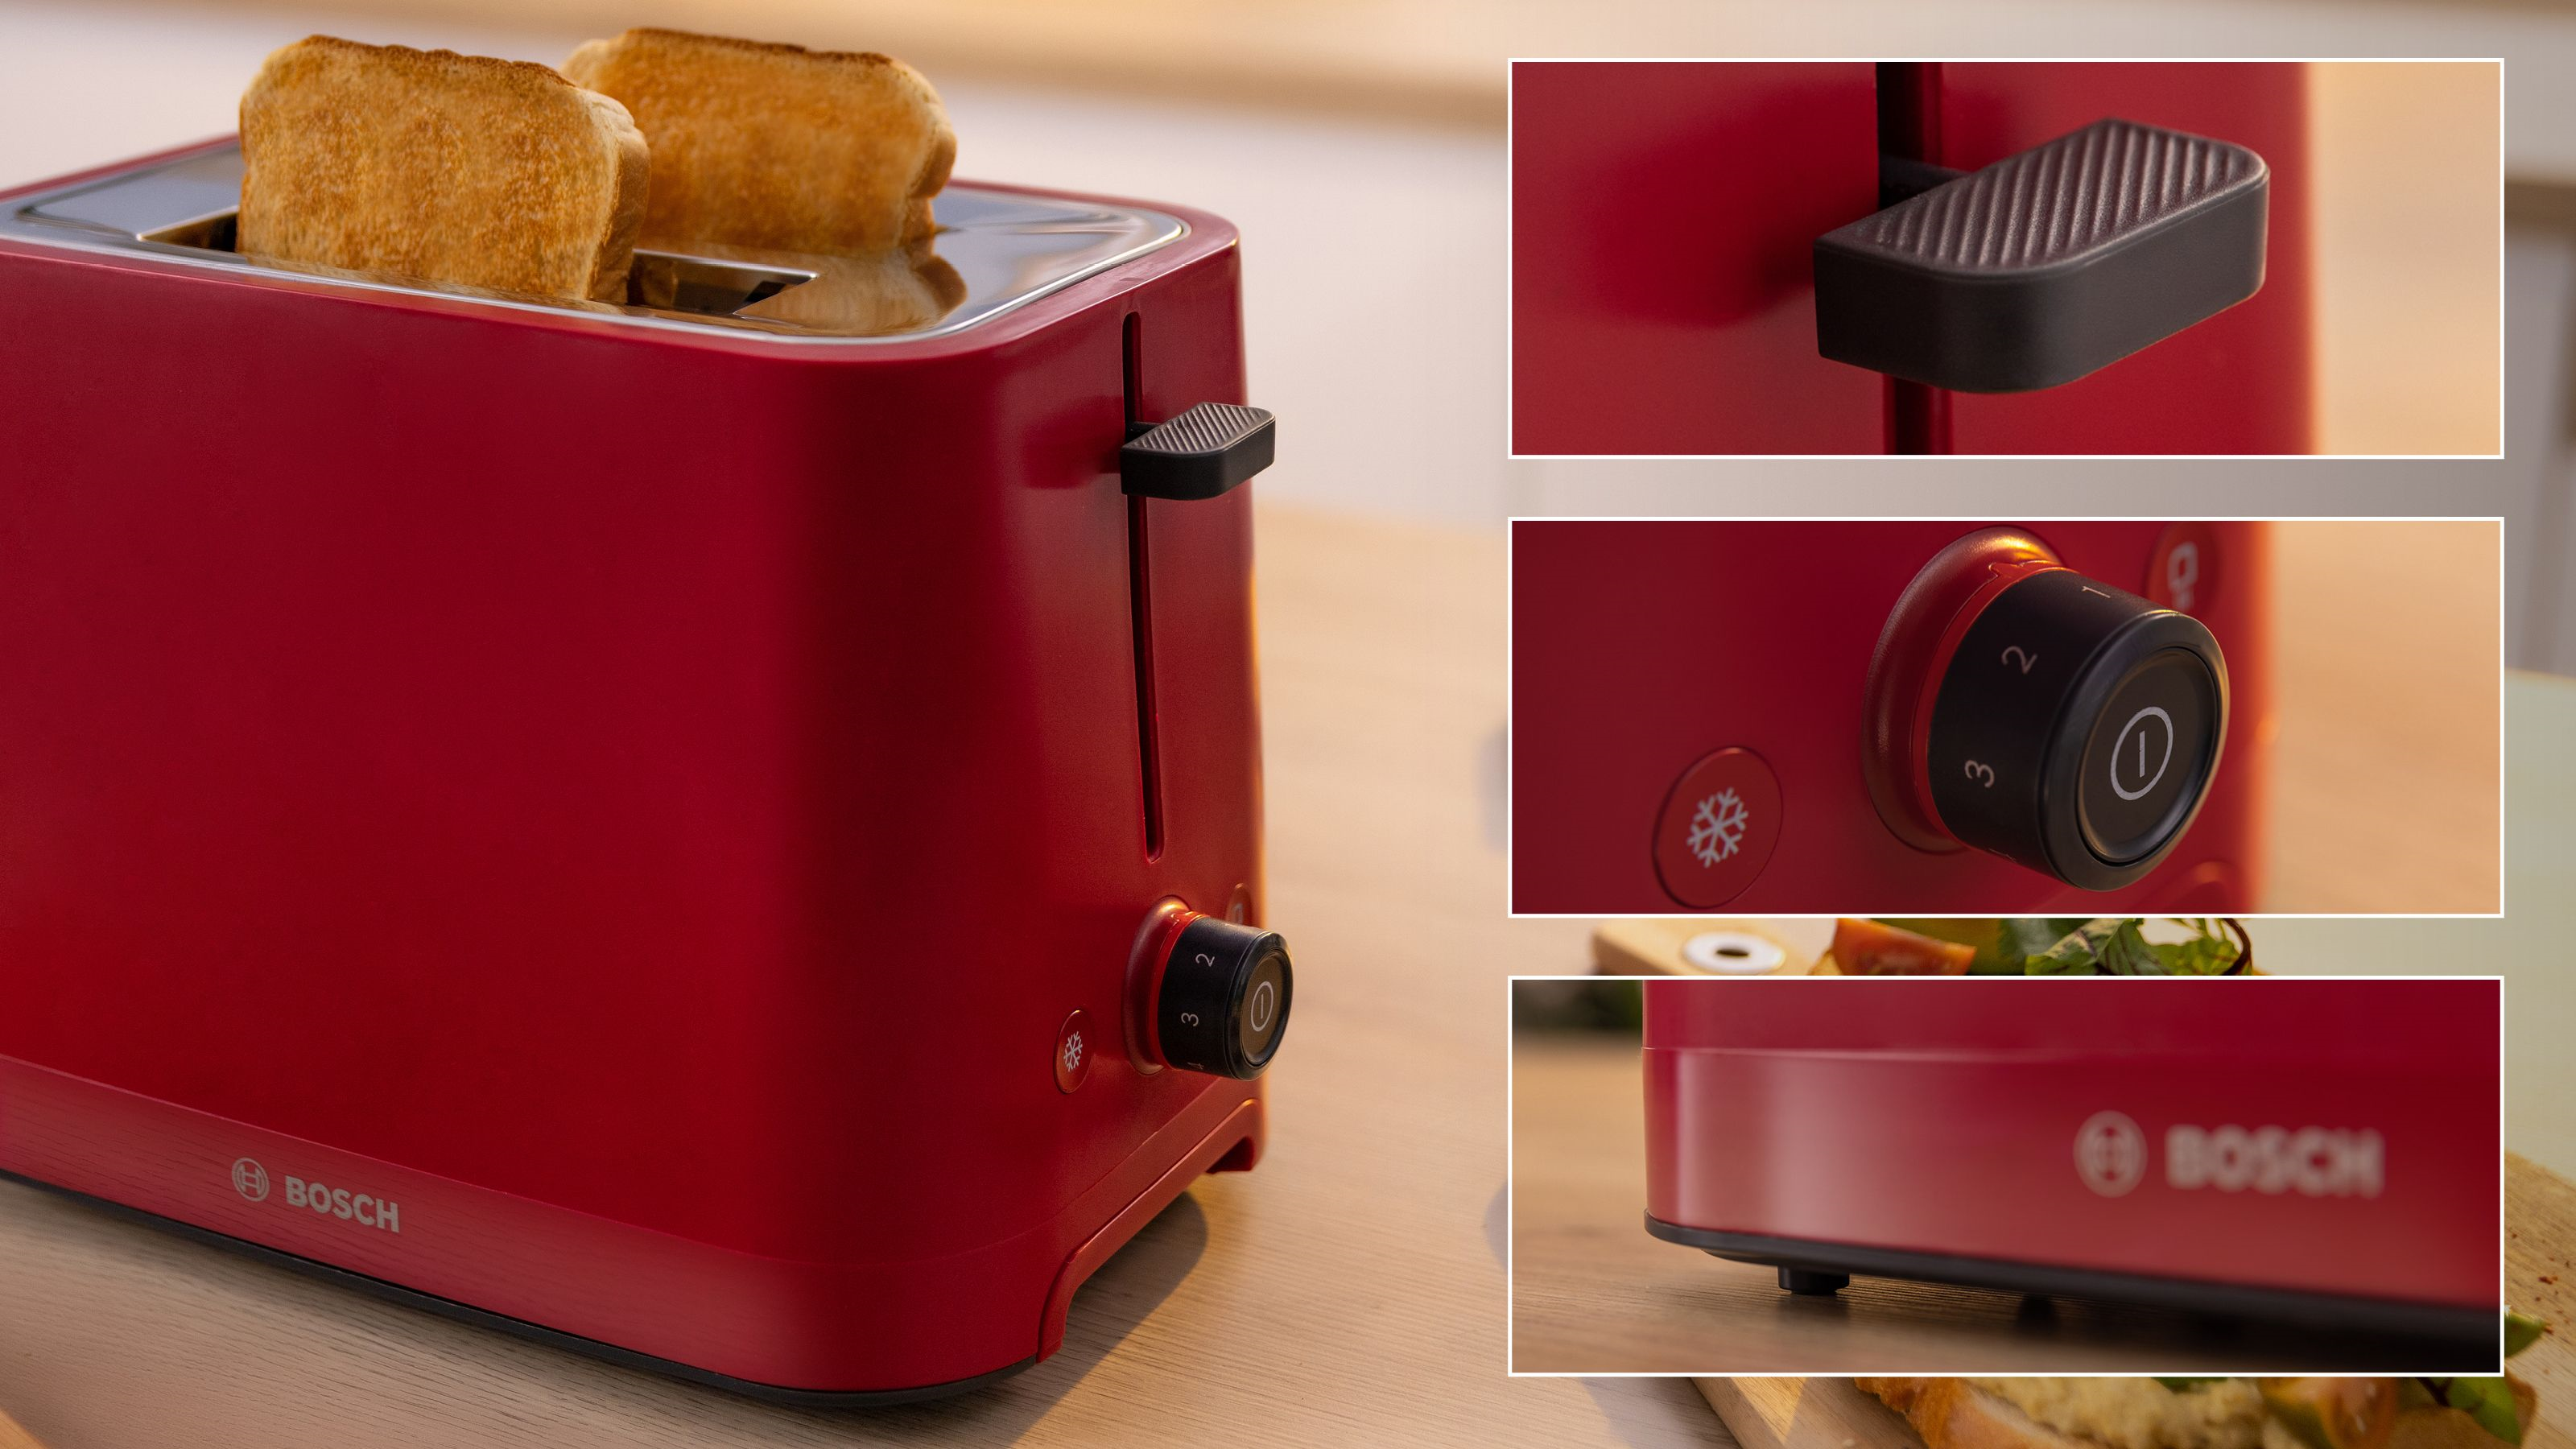 Bosch TAT3M124 Kompakt Toaster, MyMoment, Rot 